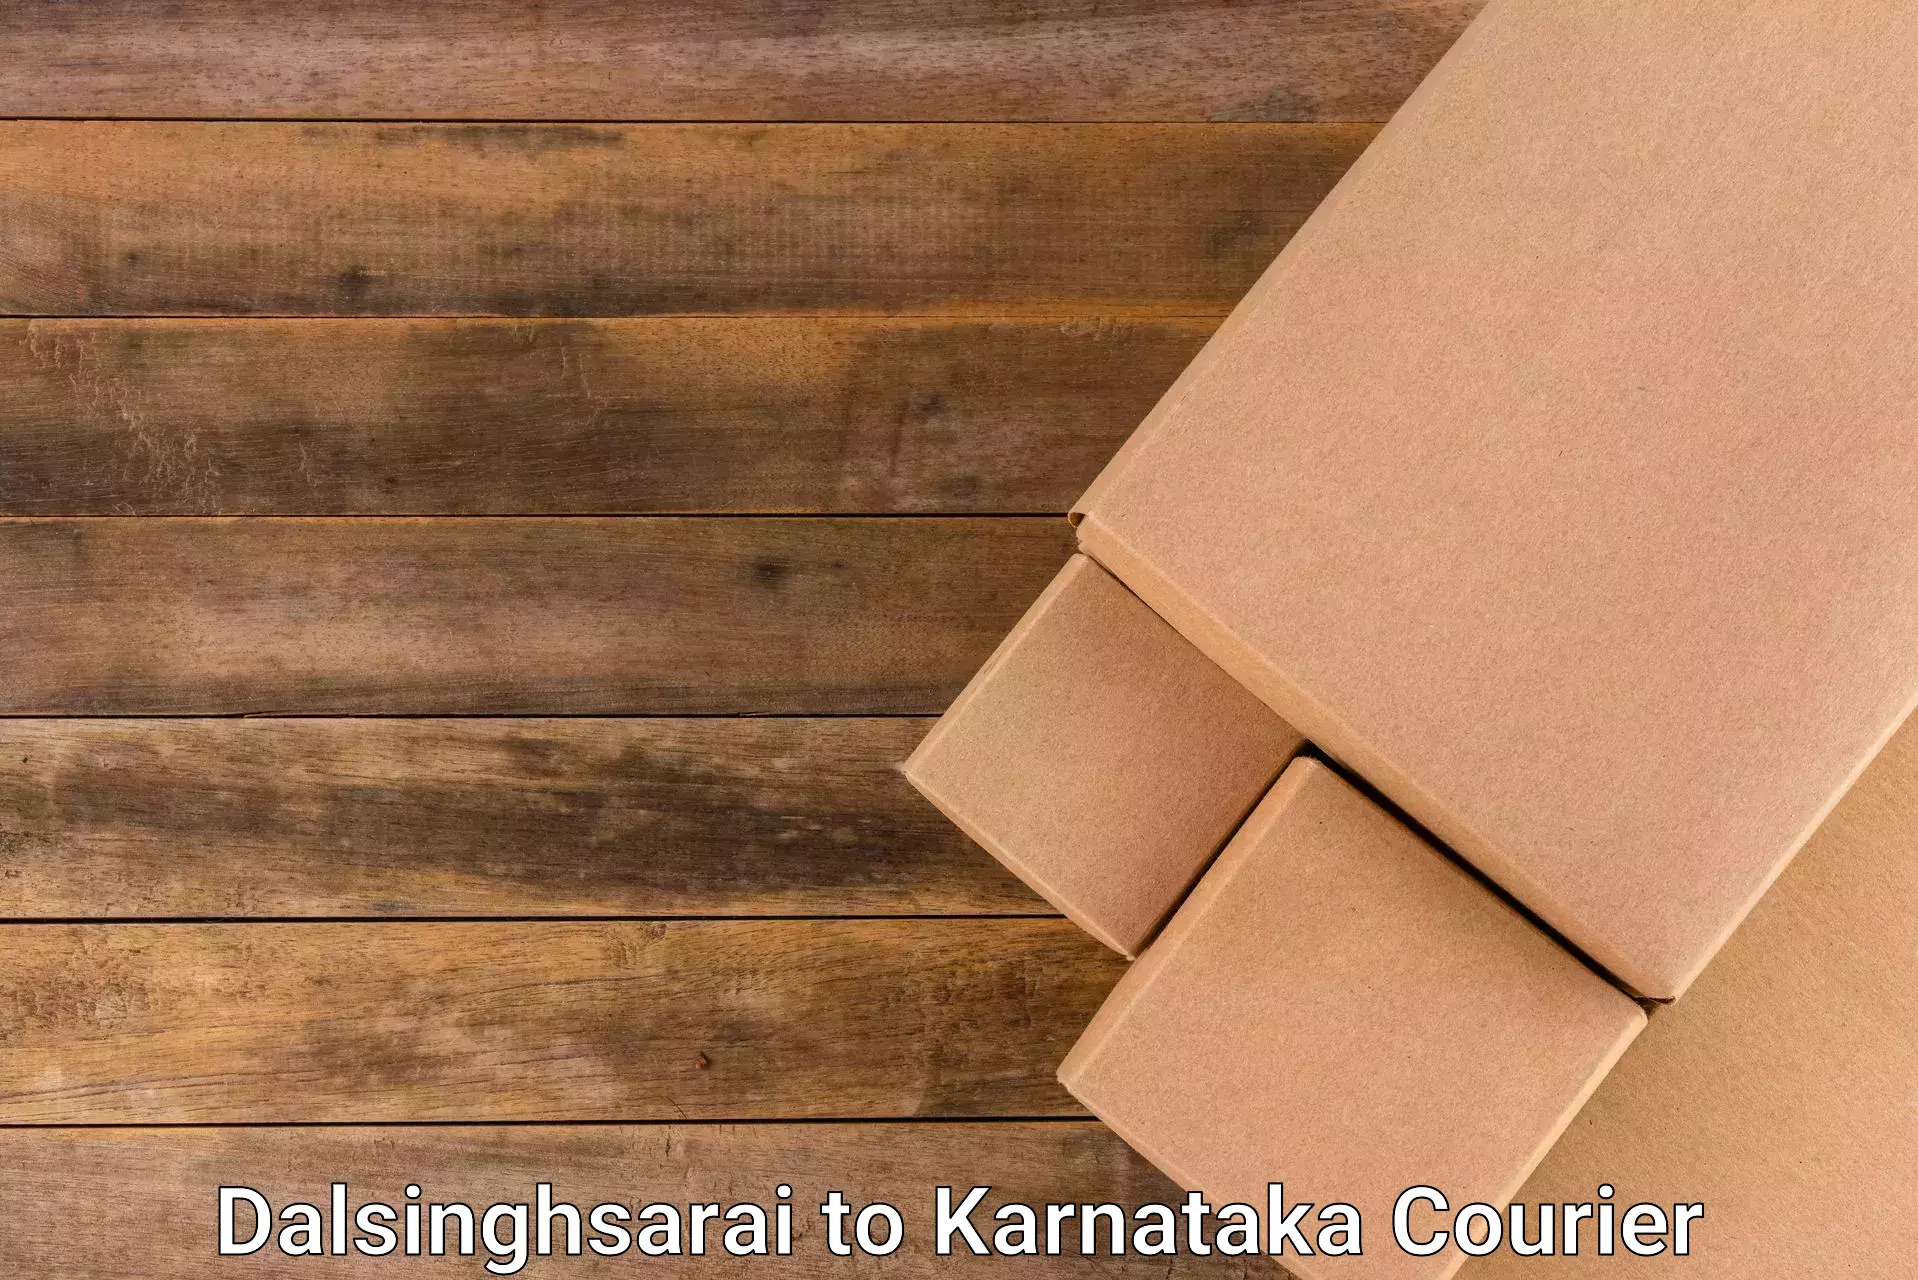 Smart logistics strategies Dalsinghsarai to Karnataka